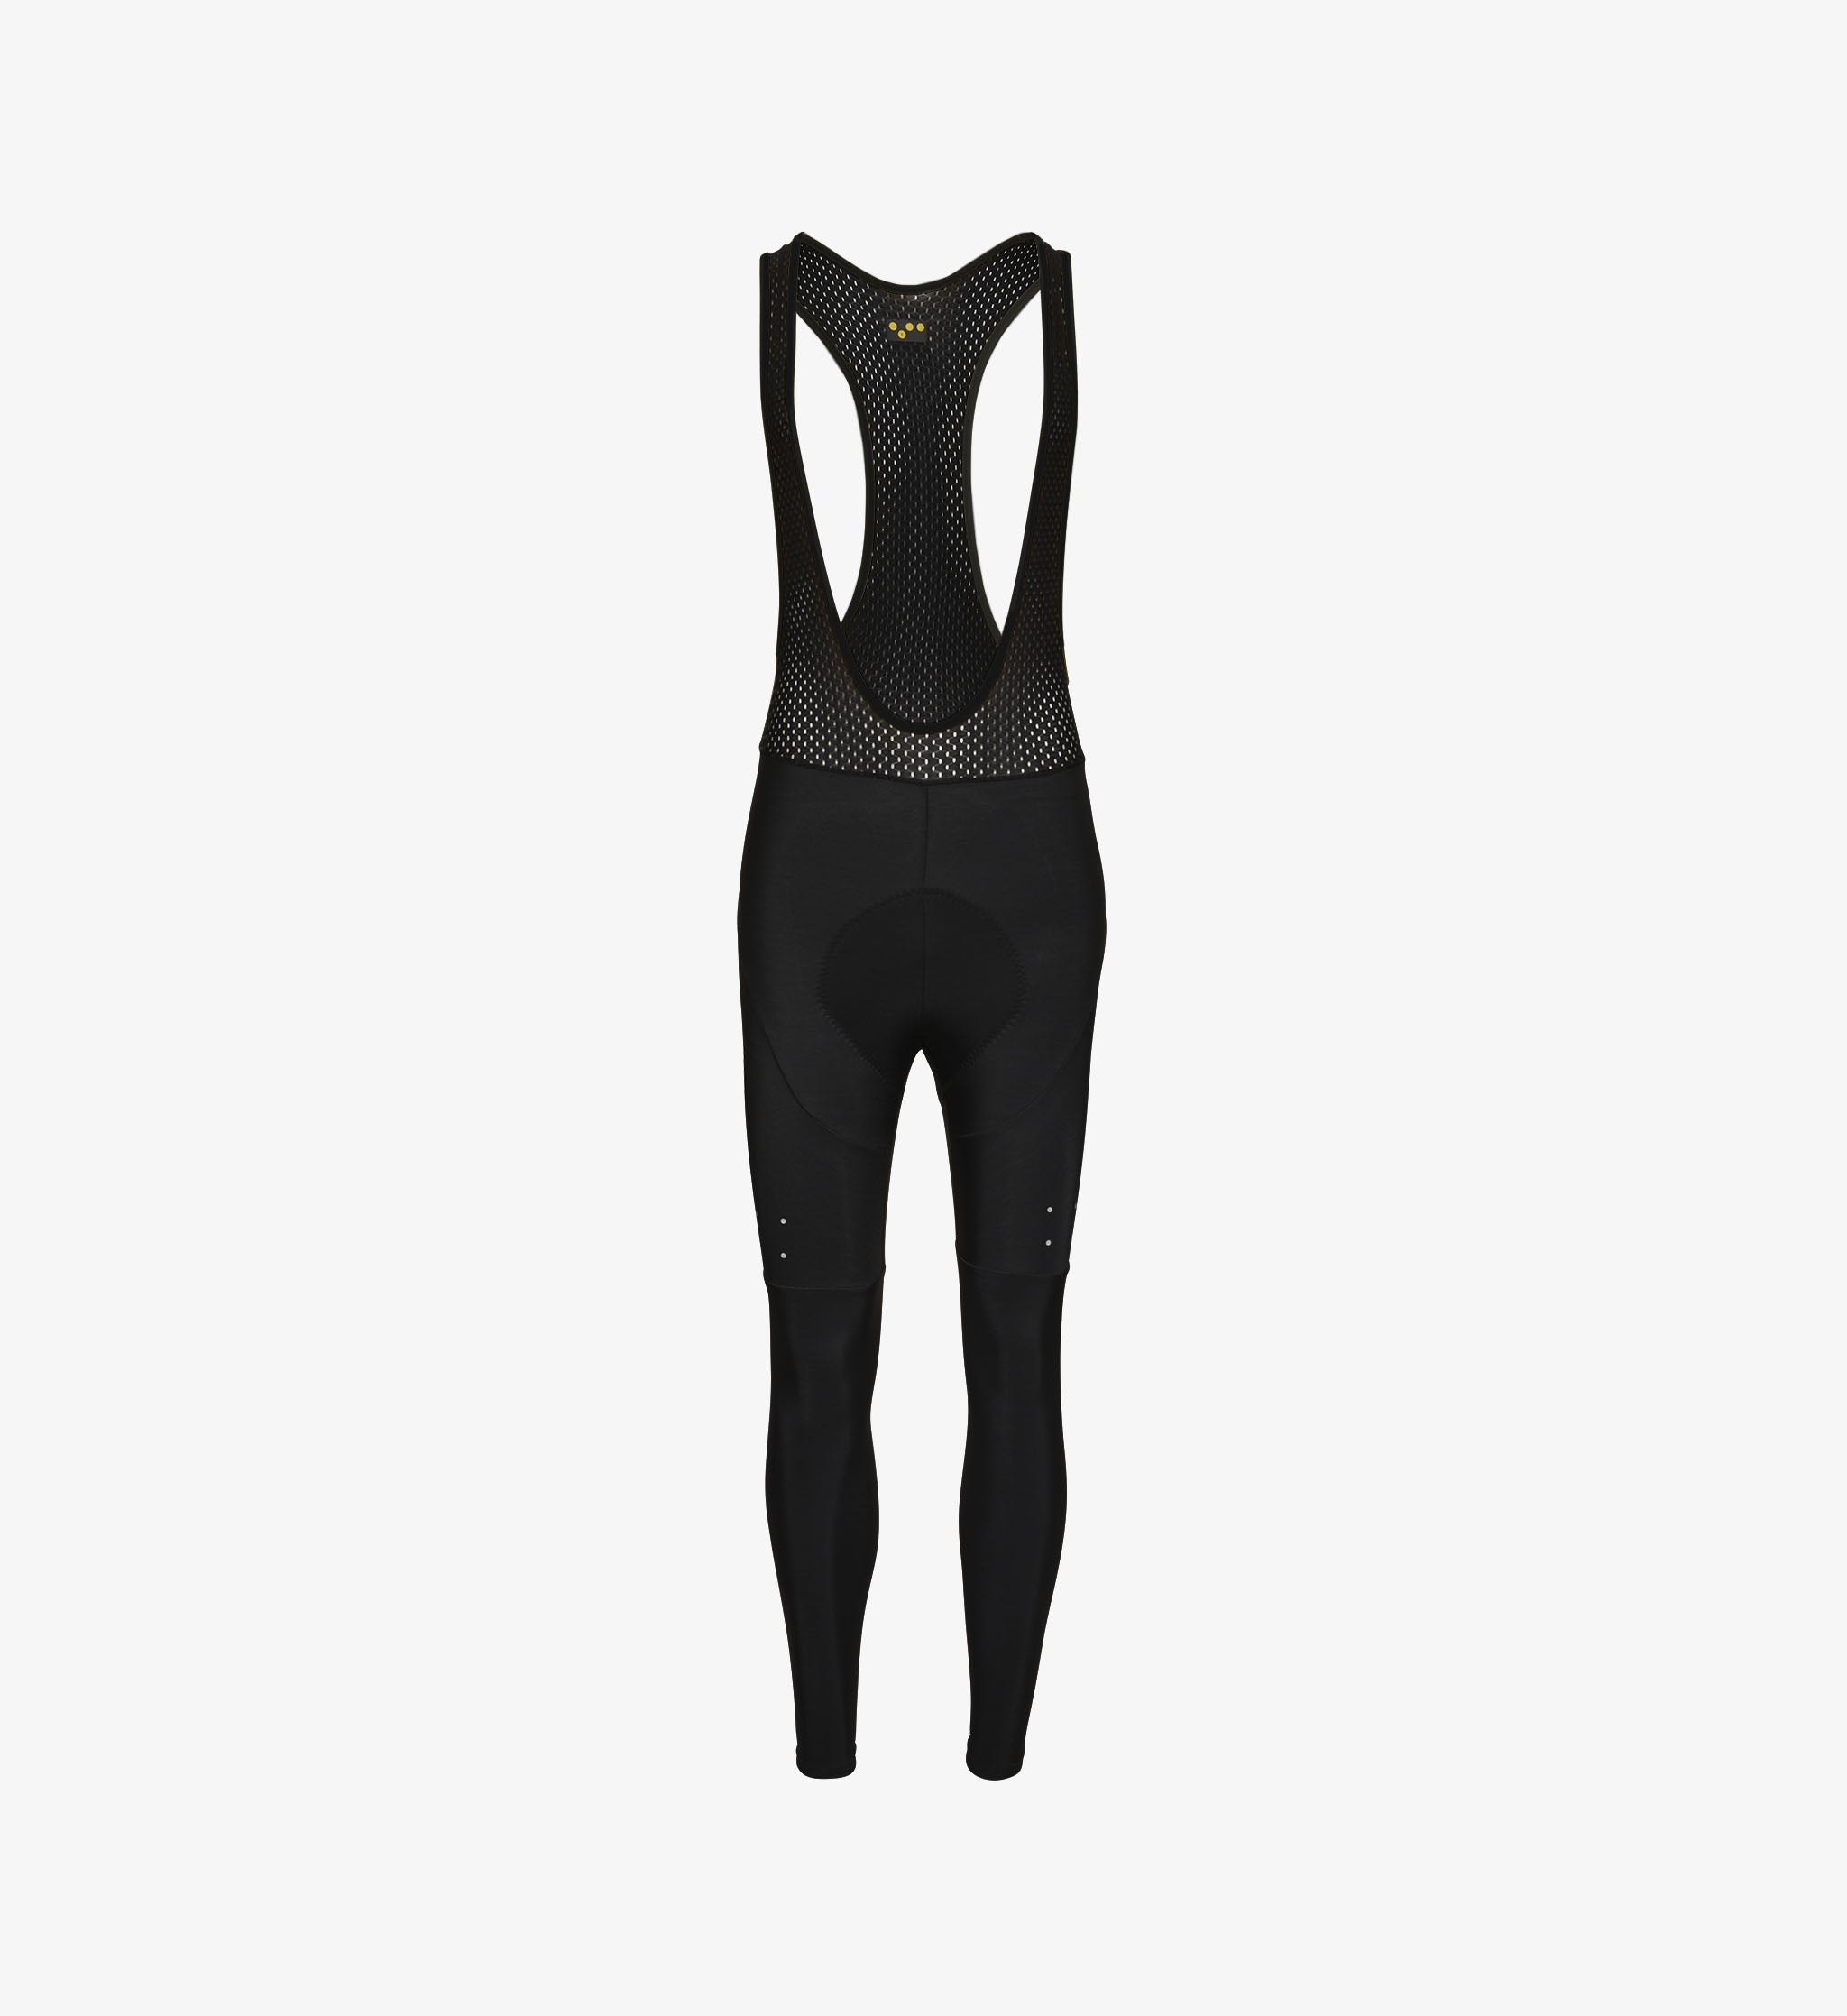 SuperFLEECE Cycling Bib Tights - Black, Italian Fabrics, Warm